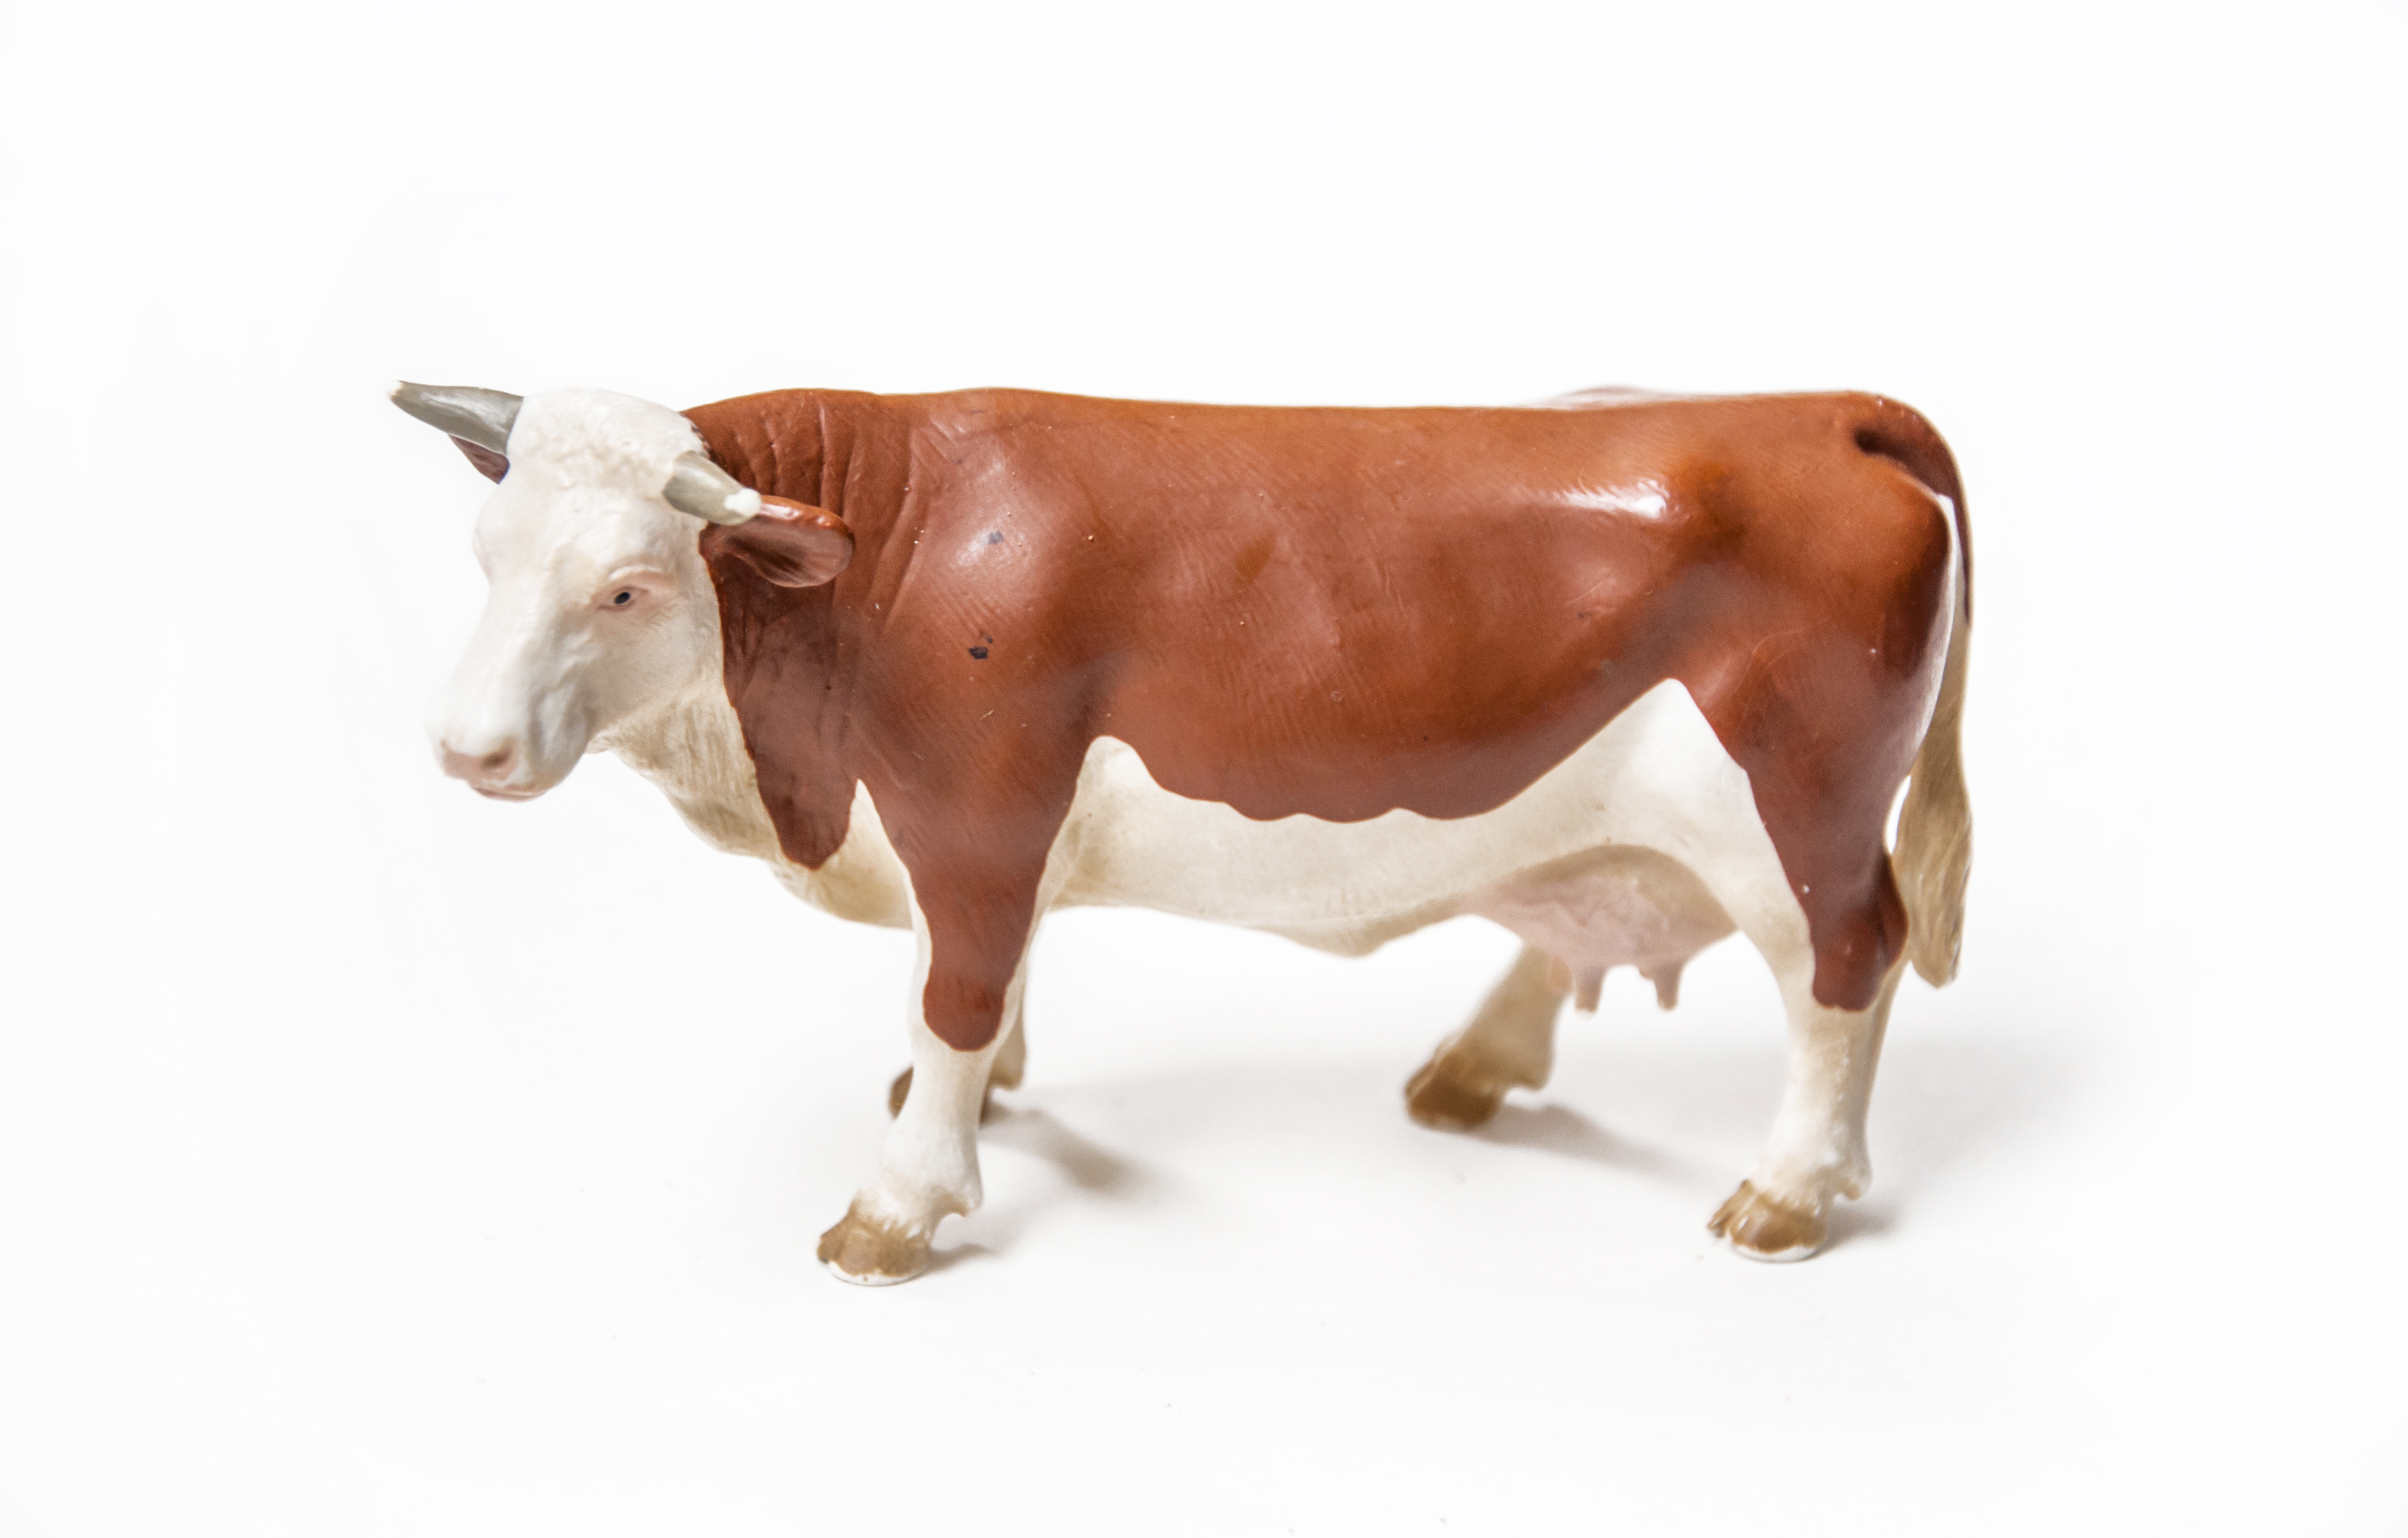 Cow plastic toy statue, Animal, Toy, Studioshot, Stilllife, HQ Photo